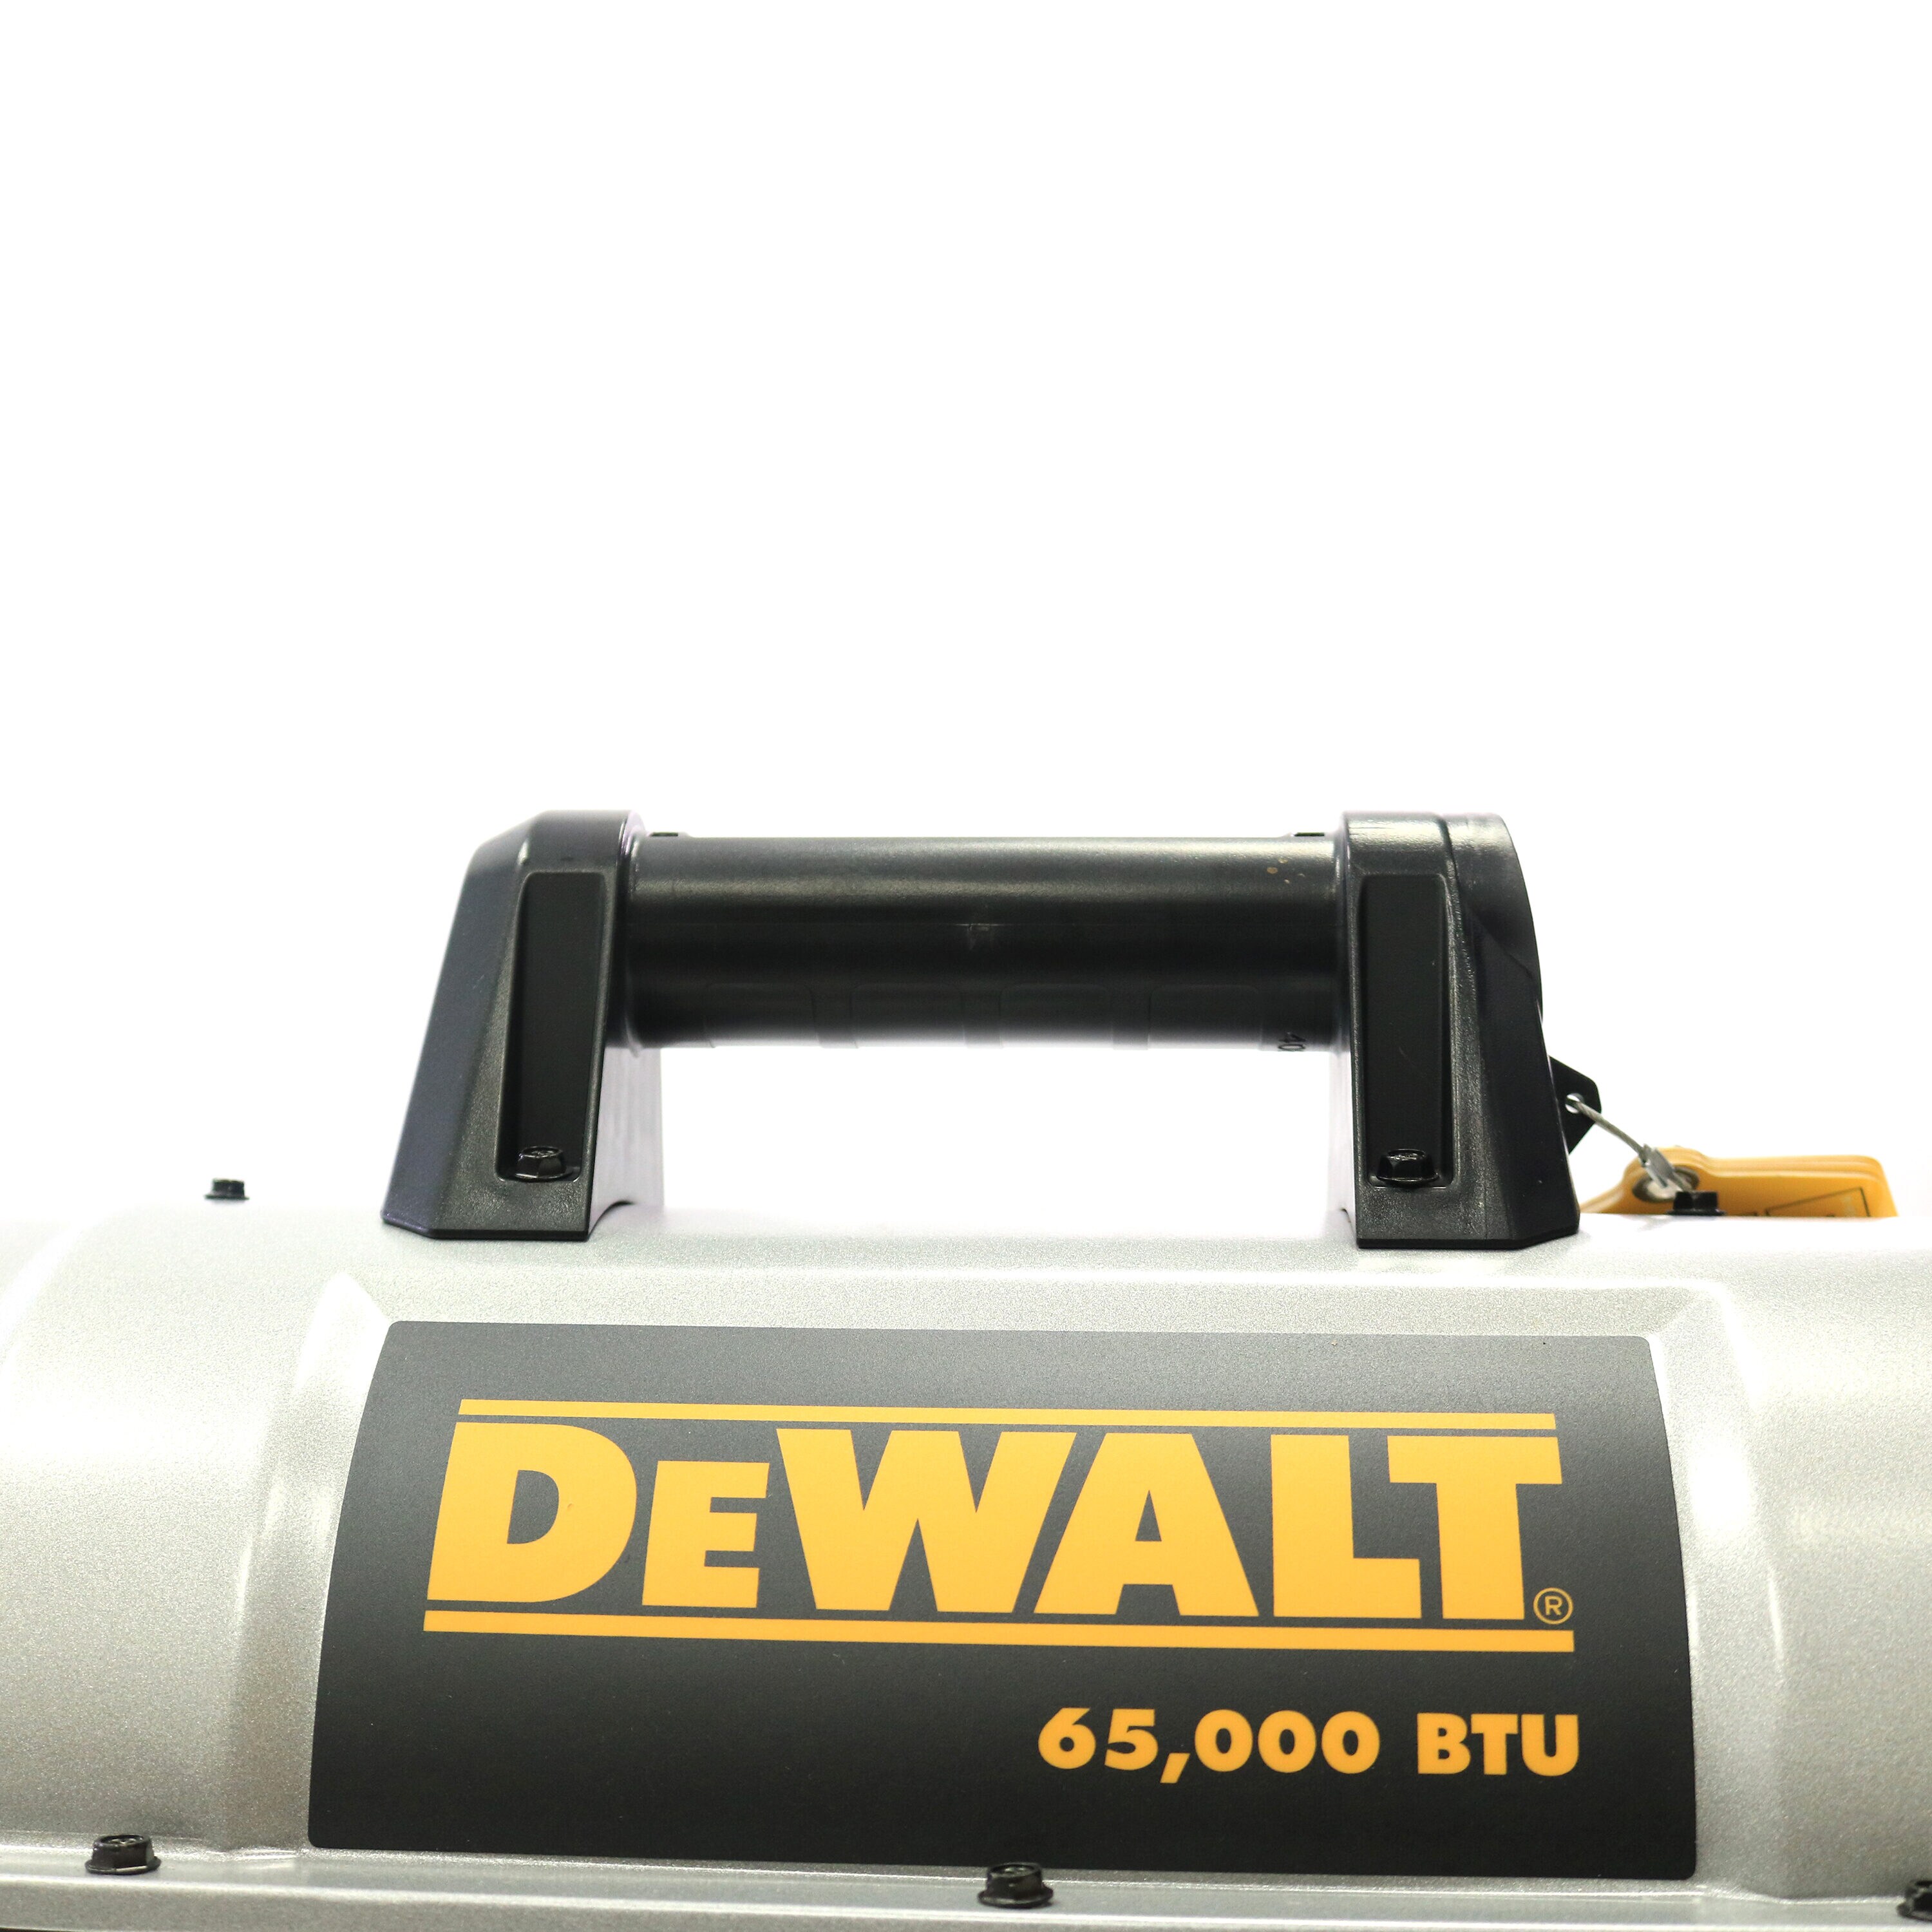 DeWALT 60,000 BTU Forced Air Propane Heater at Tractor Supply Co.